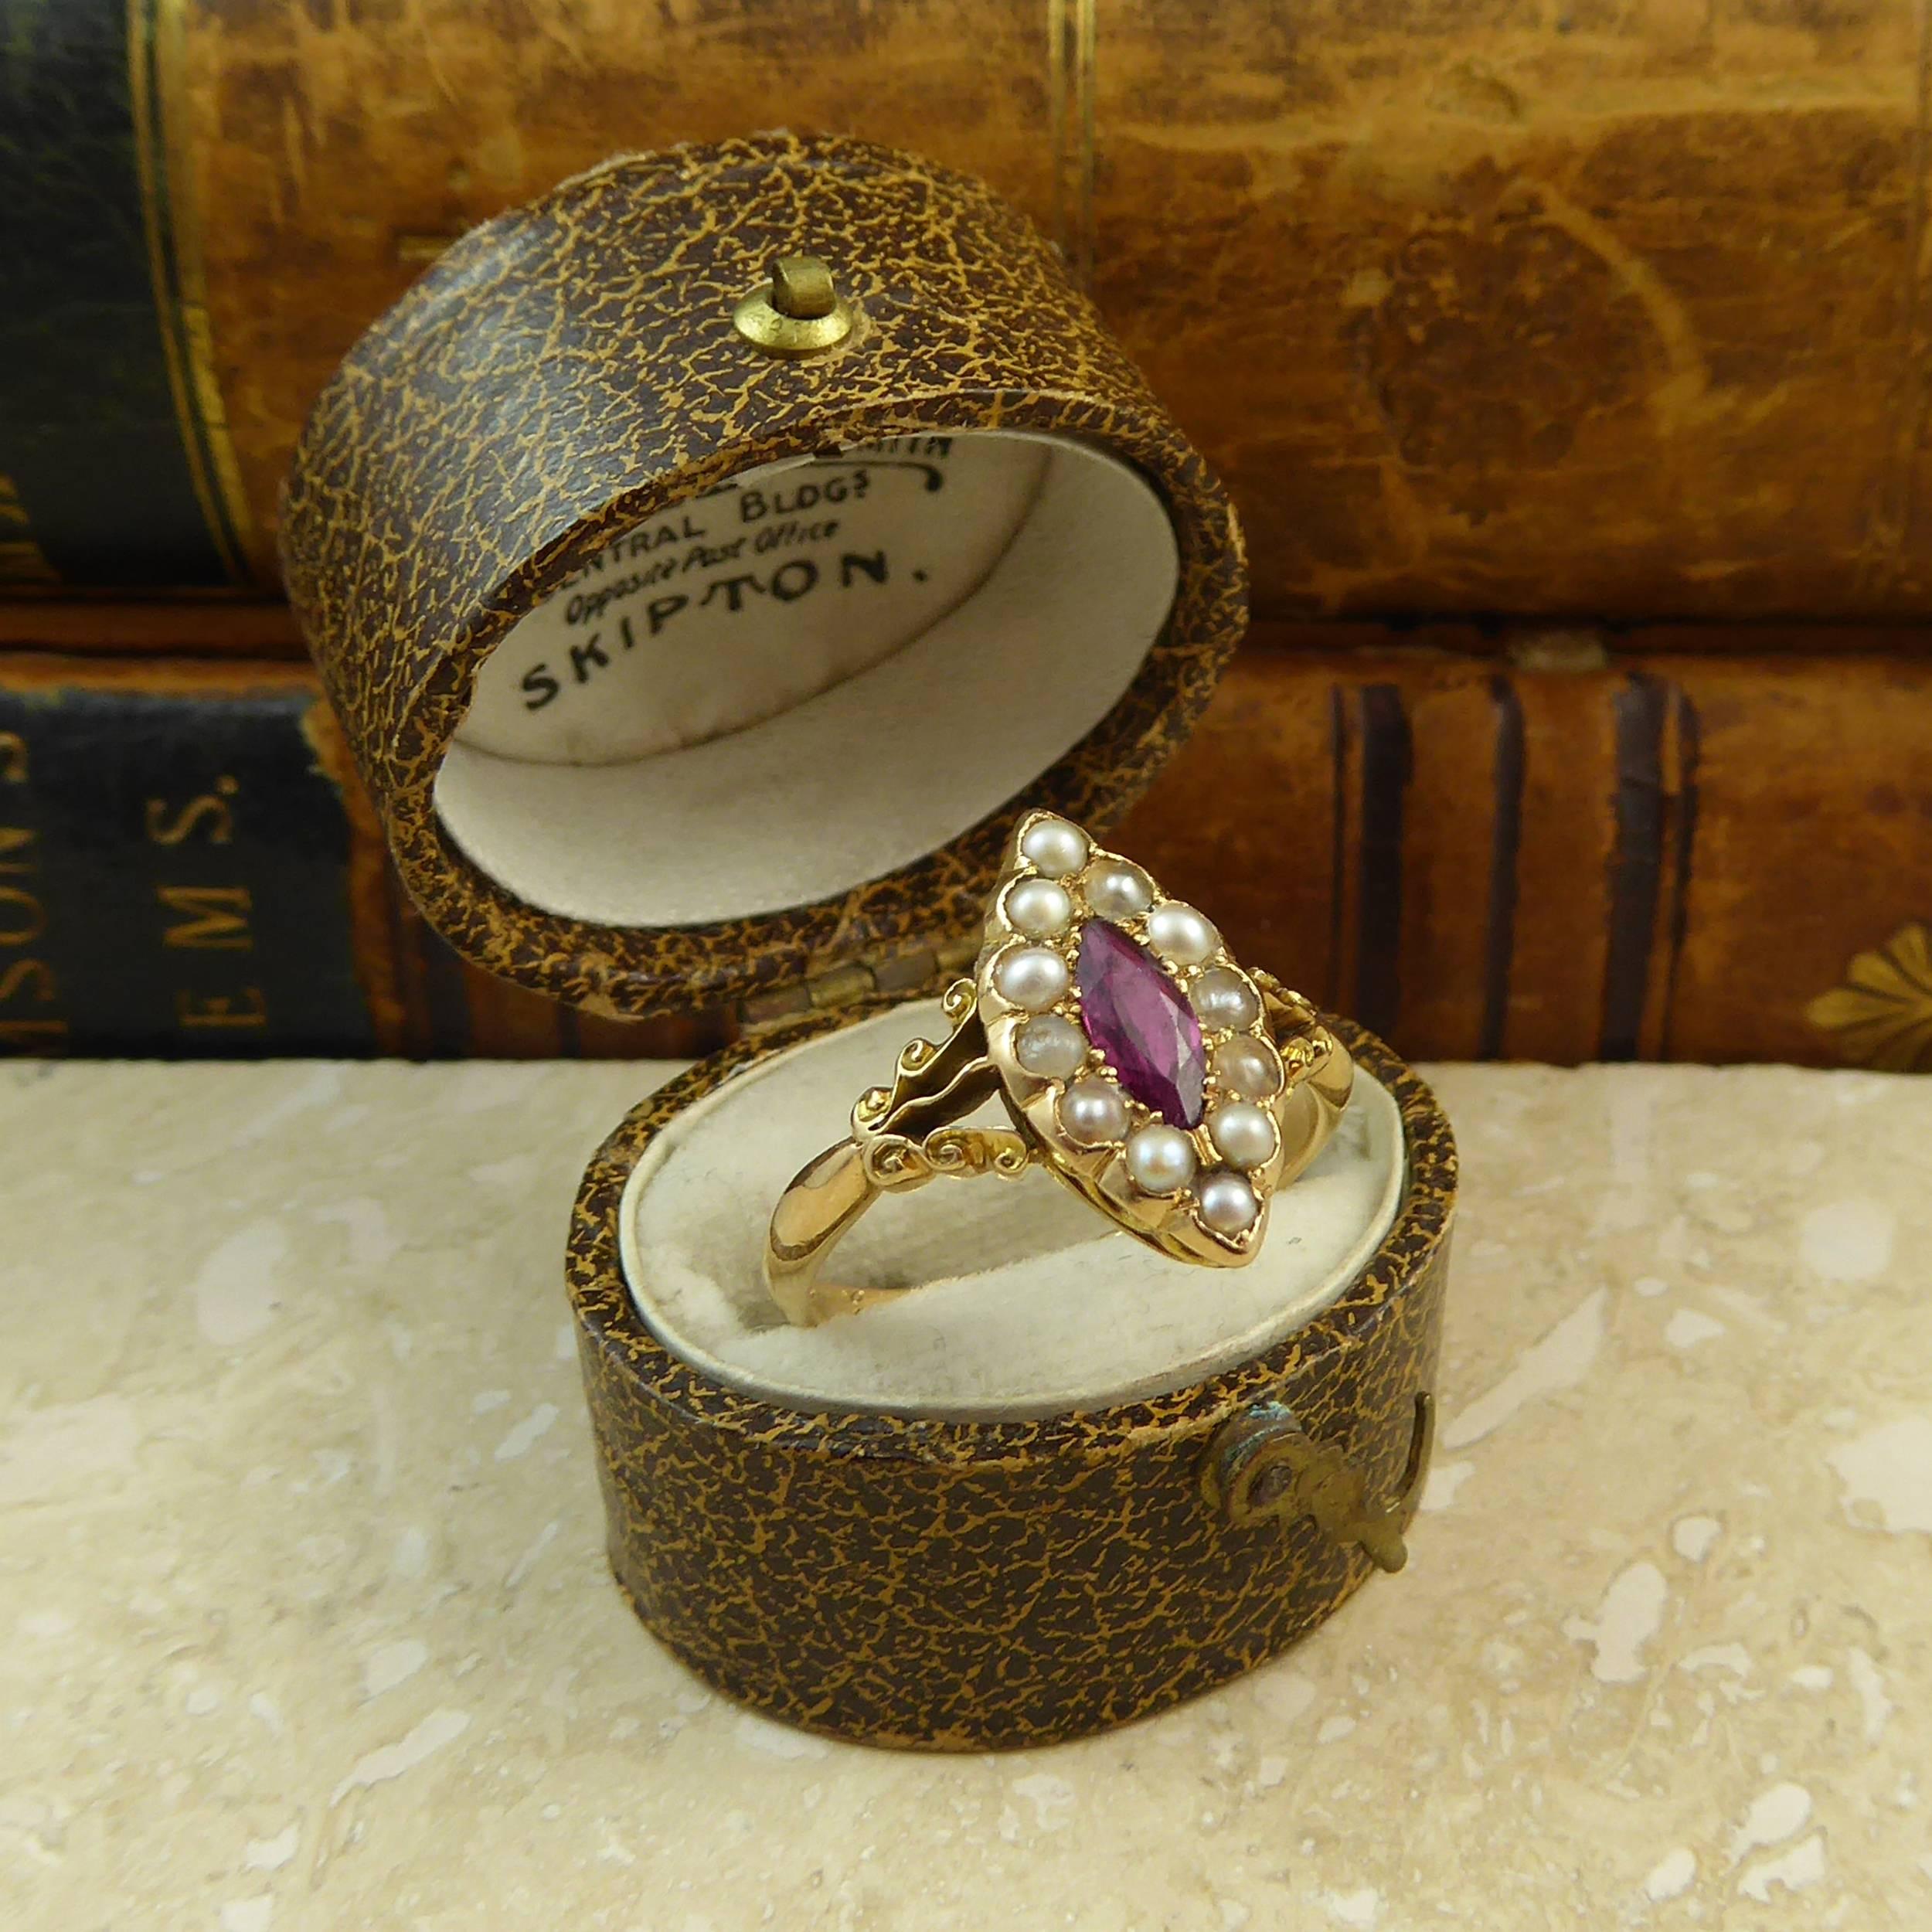 1912 engagement ring